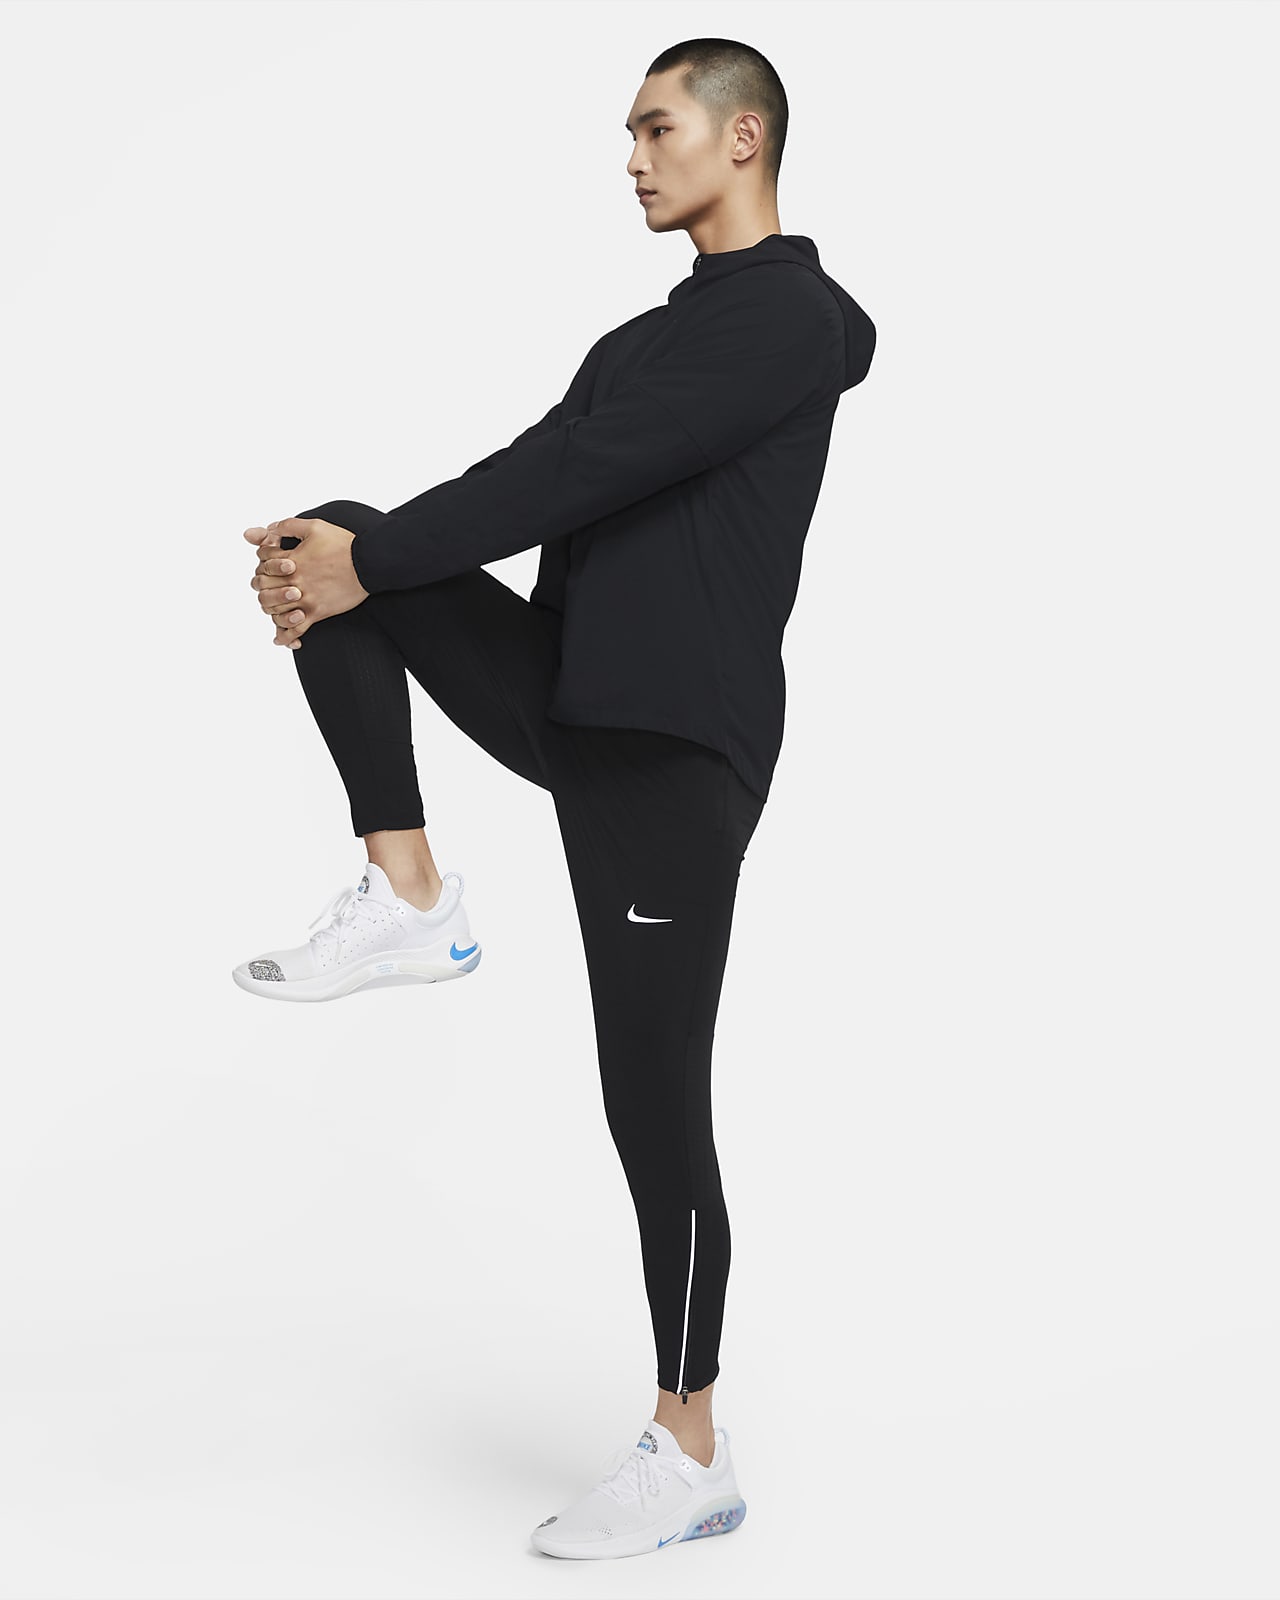 Men's Phenom Elite Tight, Nike